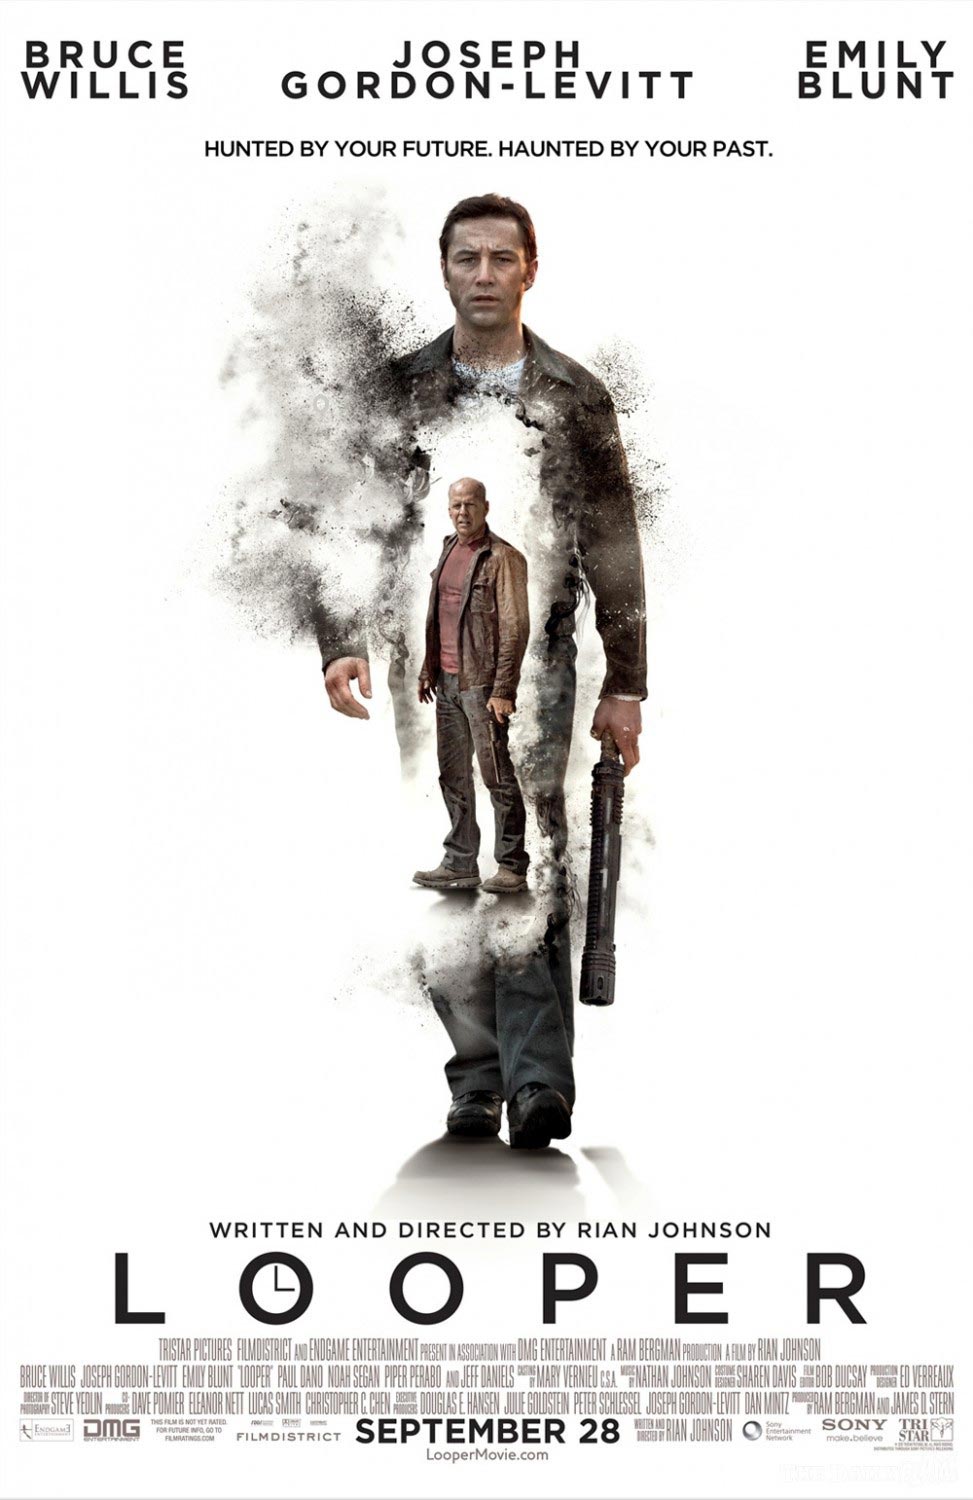 http://www.filmofilia.com/wp-content/uploads/2012/08/looper_poster.jpg